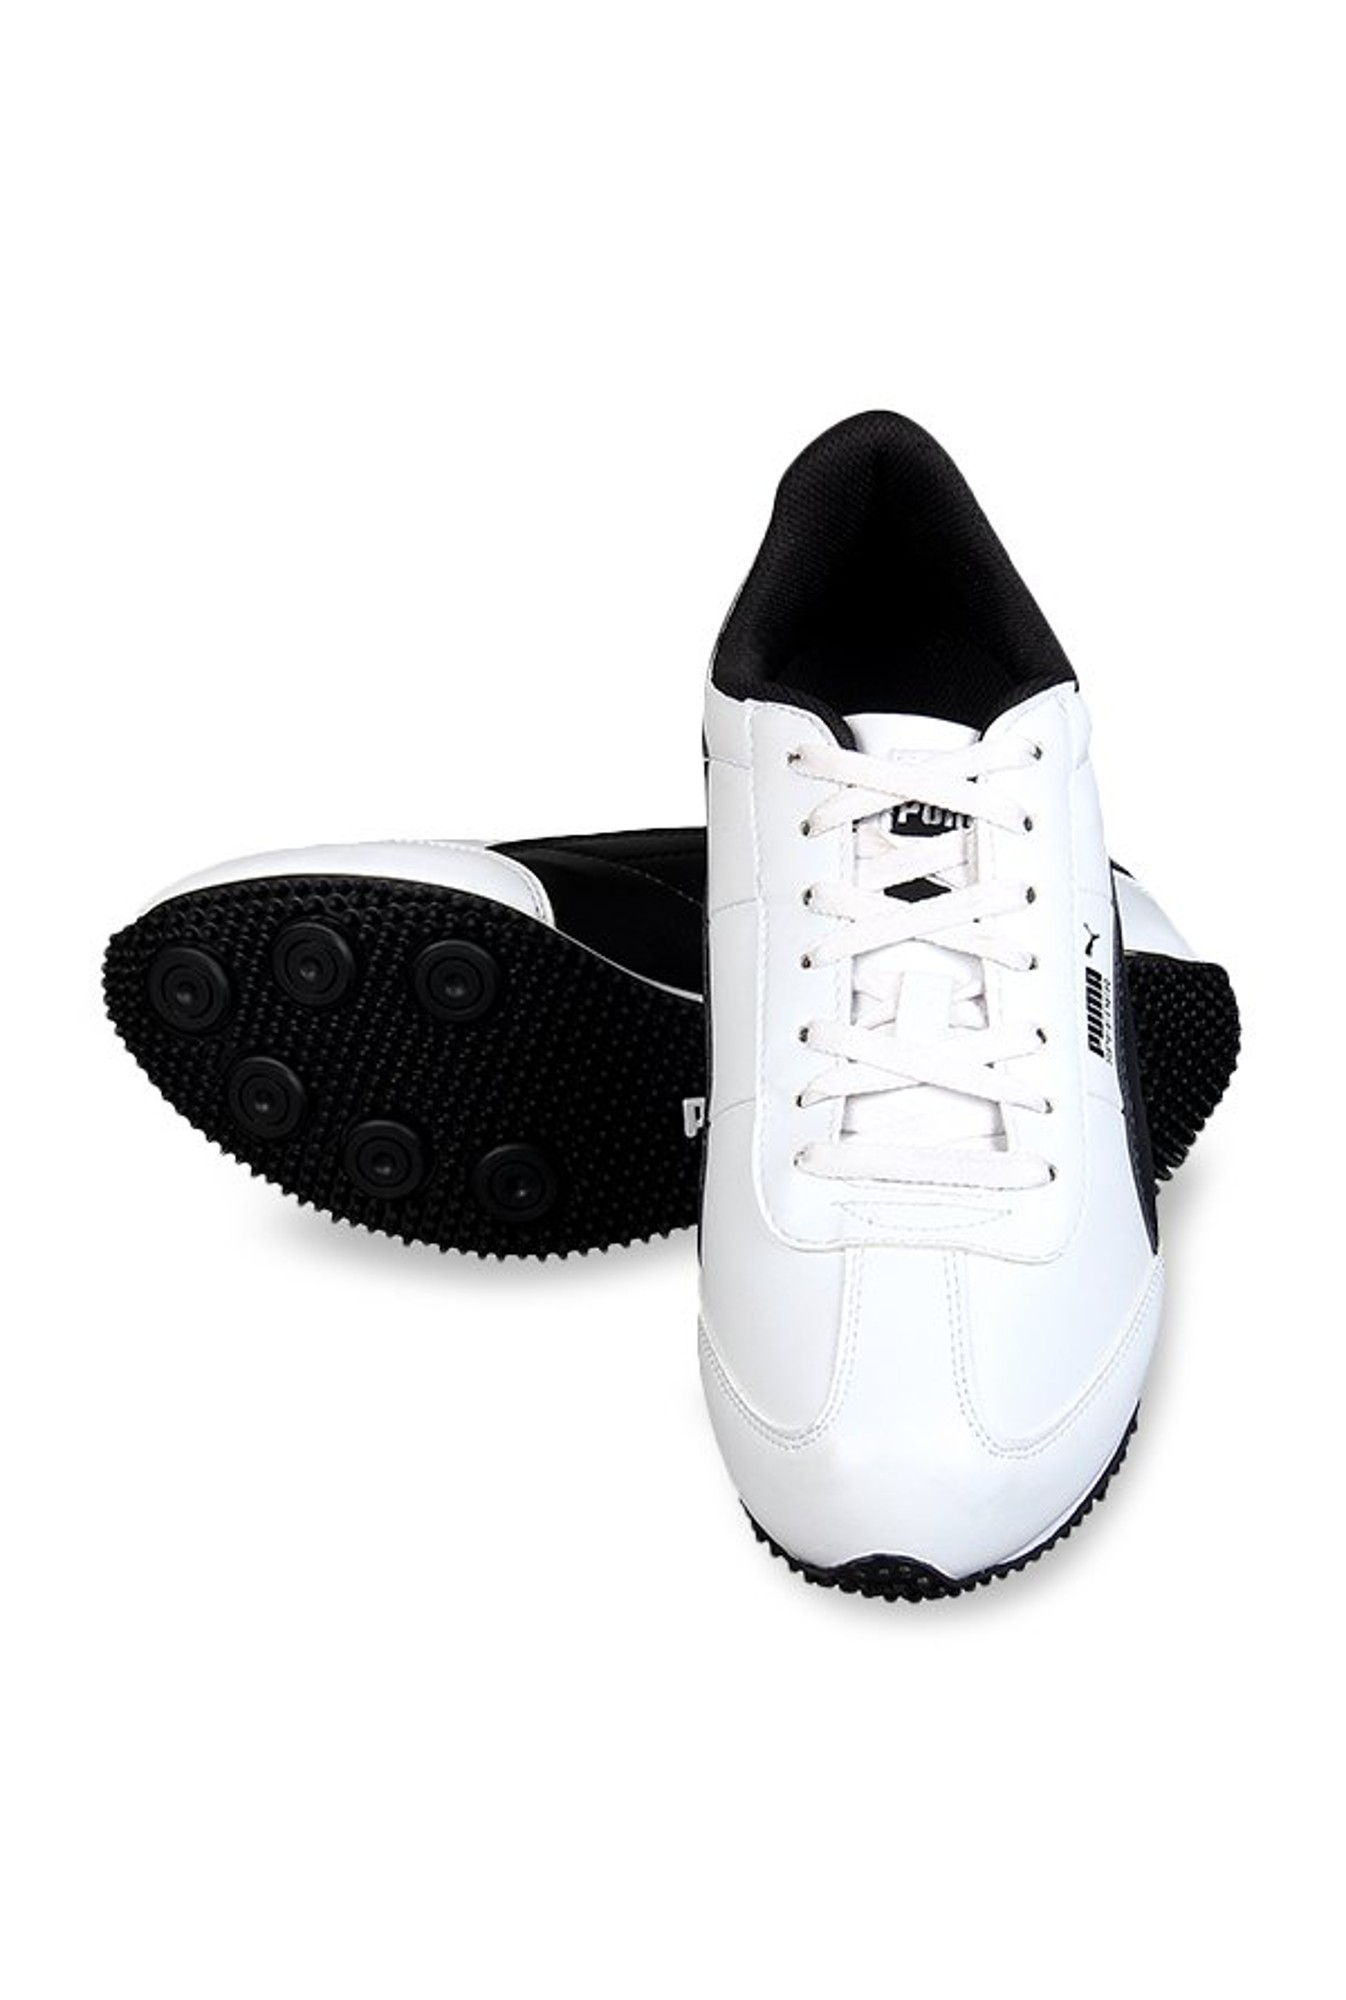 Buy PUMA Men's Urban SL IDP Sneakers (Size - 6, Black, White) Online - Best  Price PUMA Men's Urban SL IDP Sneakers (Size - 6, Black, White) - Justdial  Shop Online.